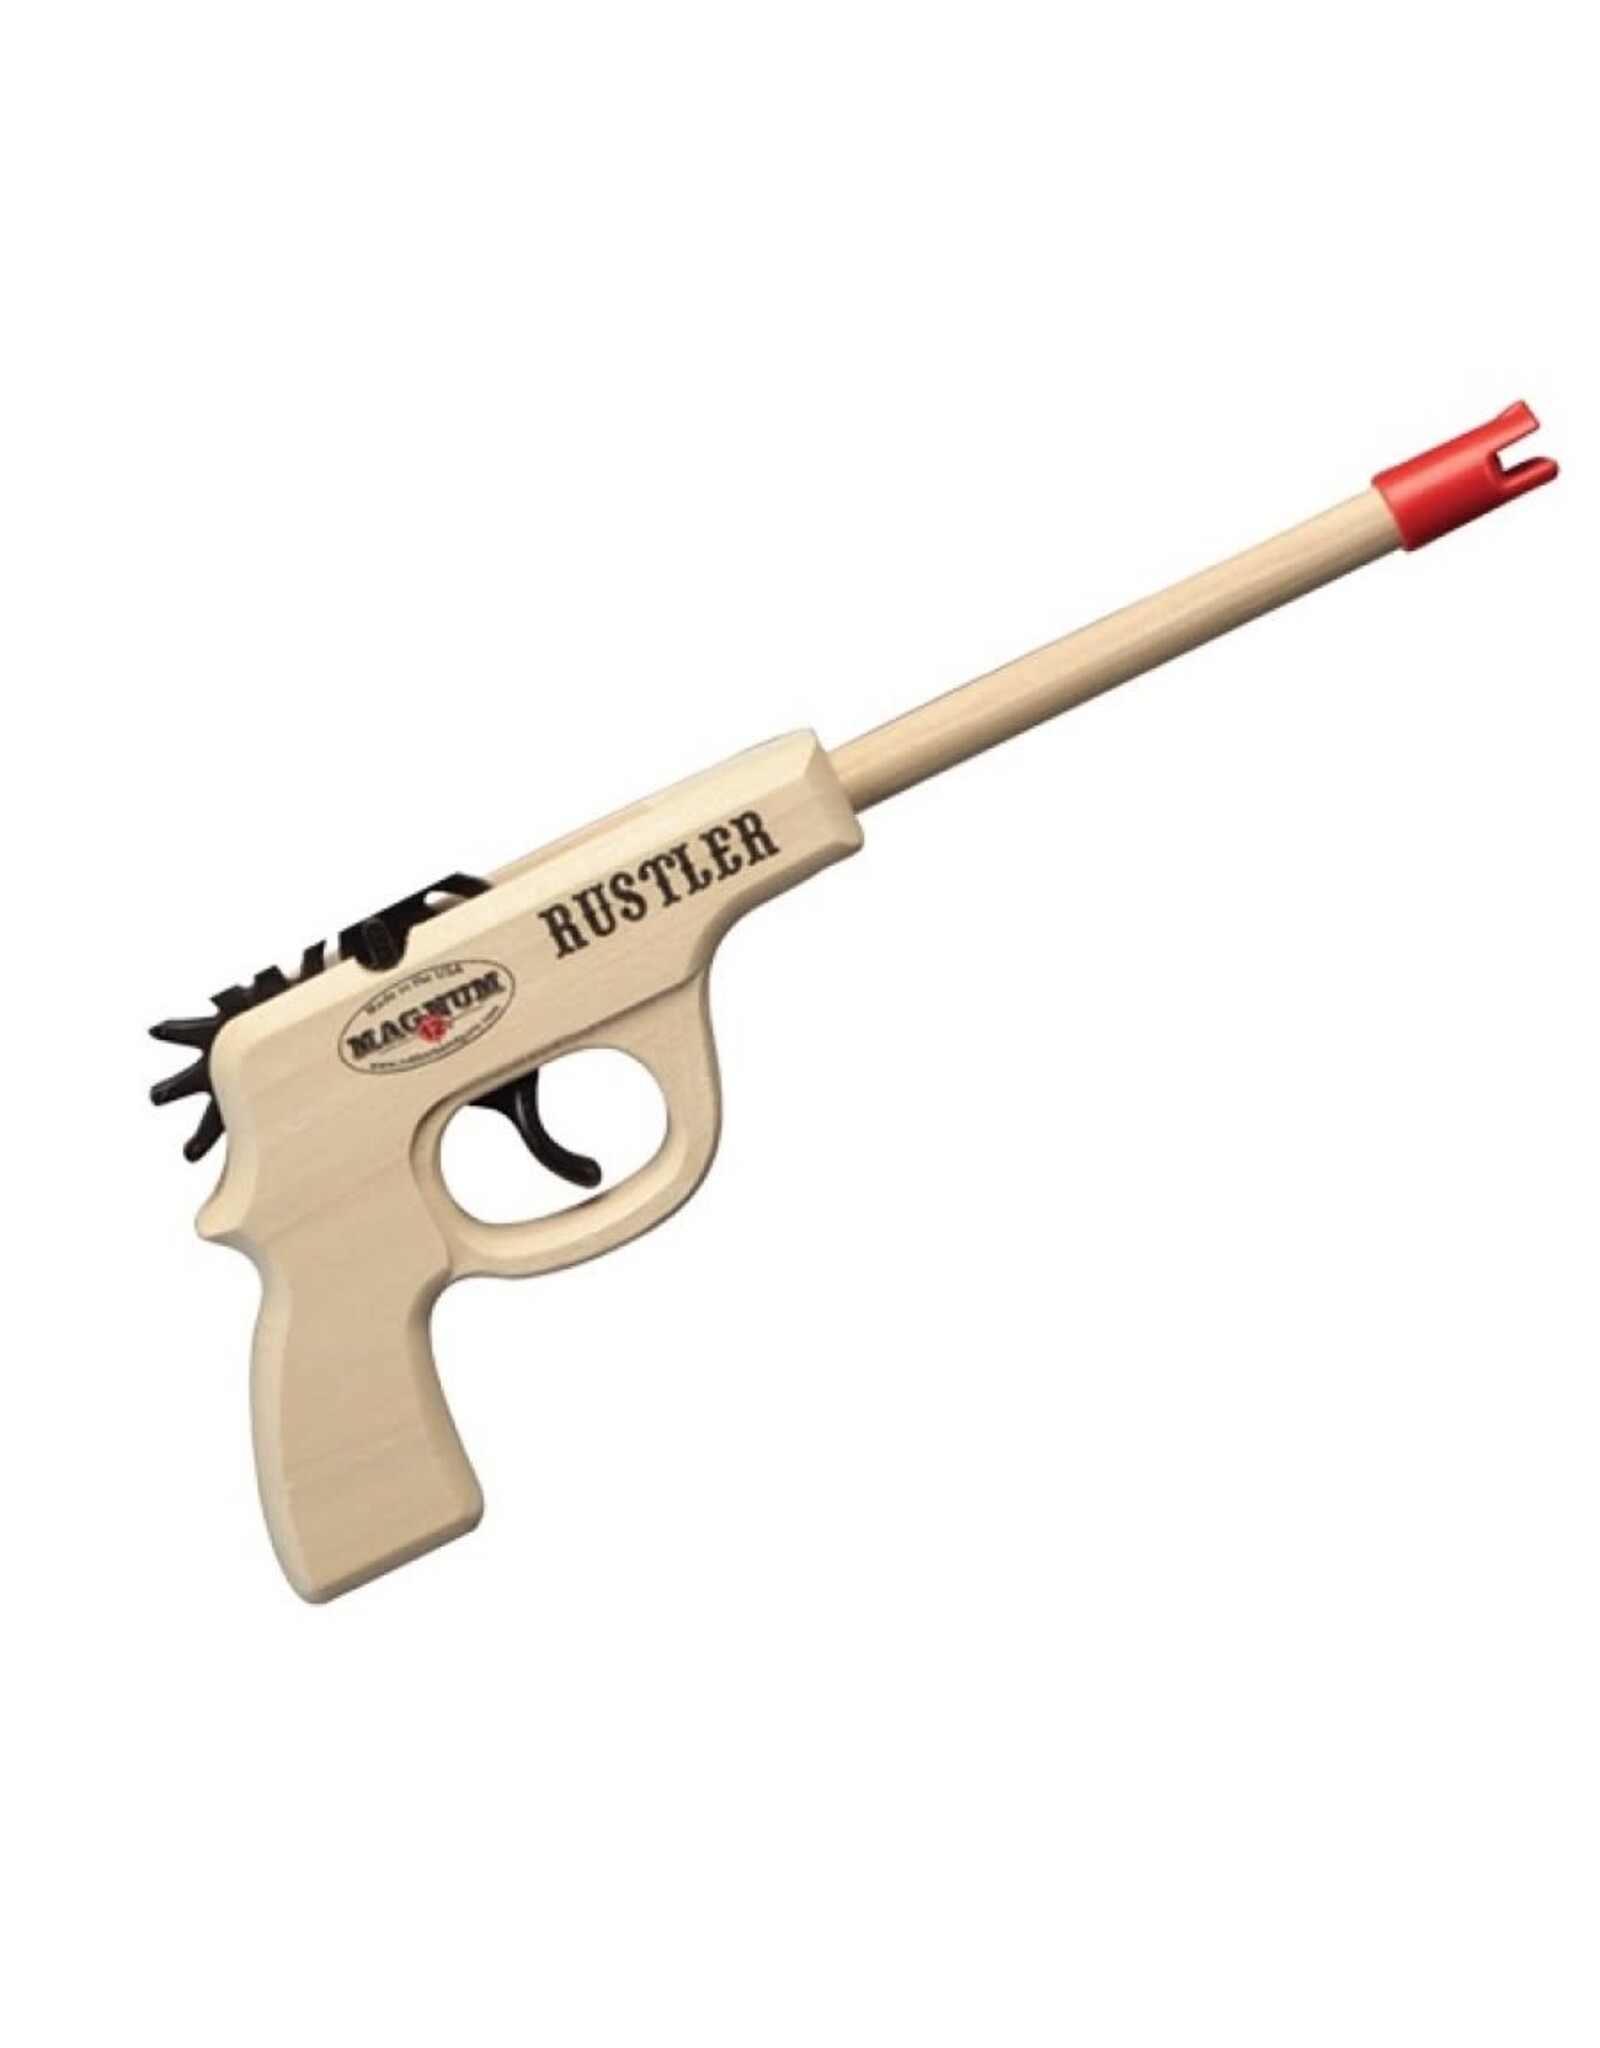 Magnum 12 Rustler Pistol Rubberband Gun